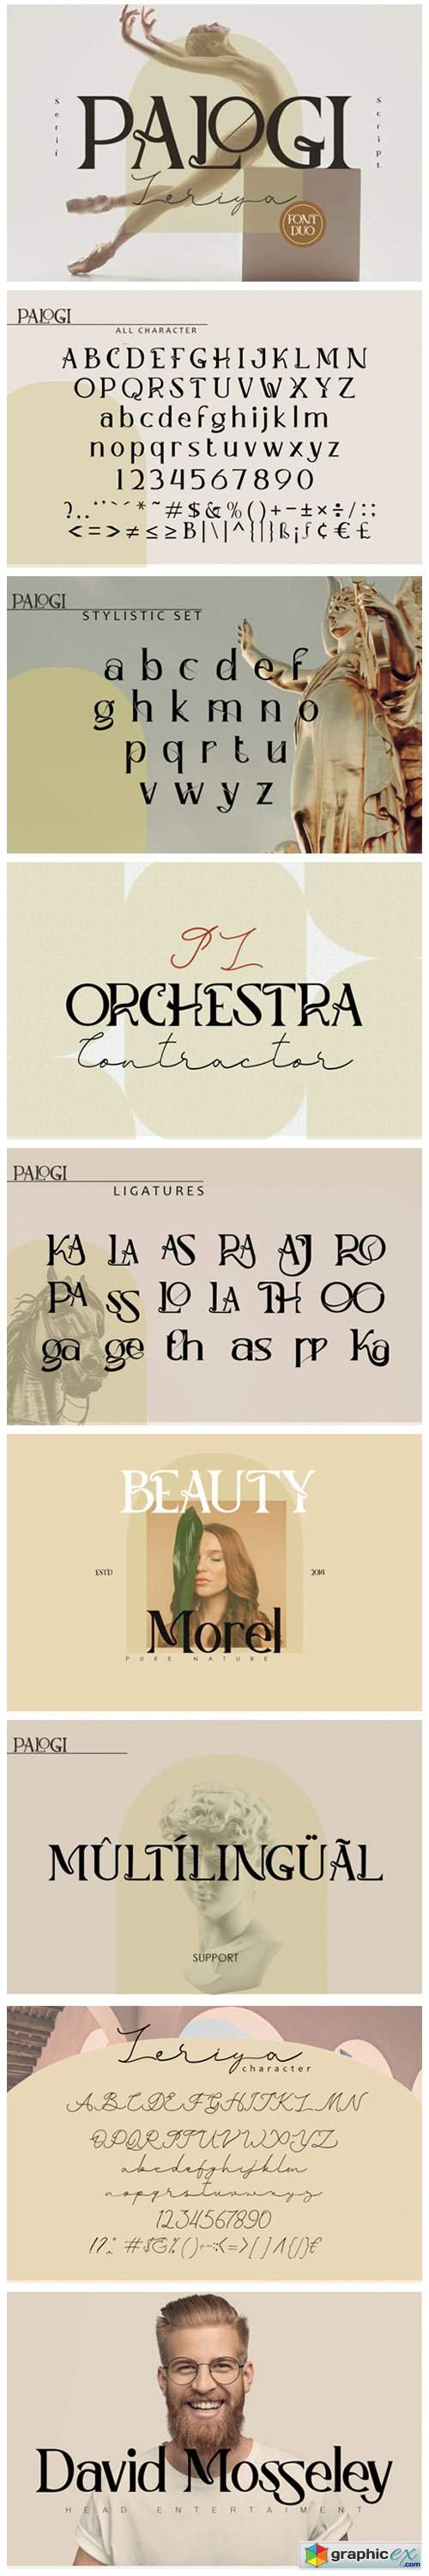  Palogi Font 